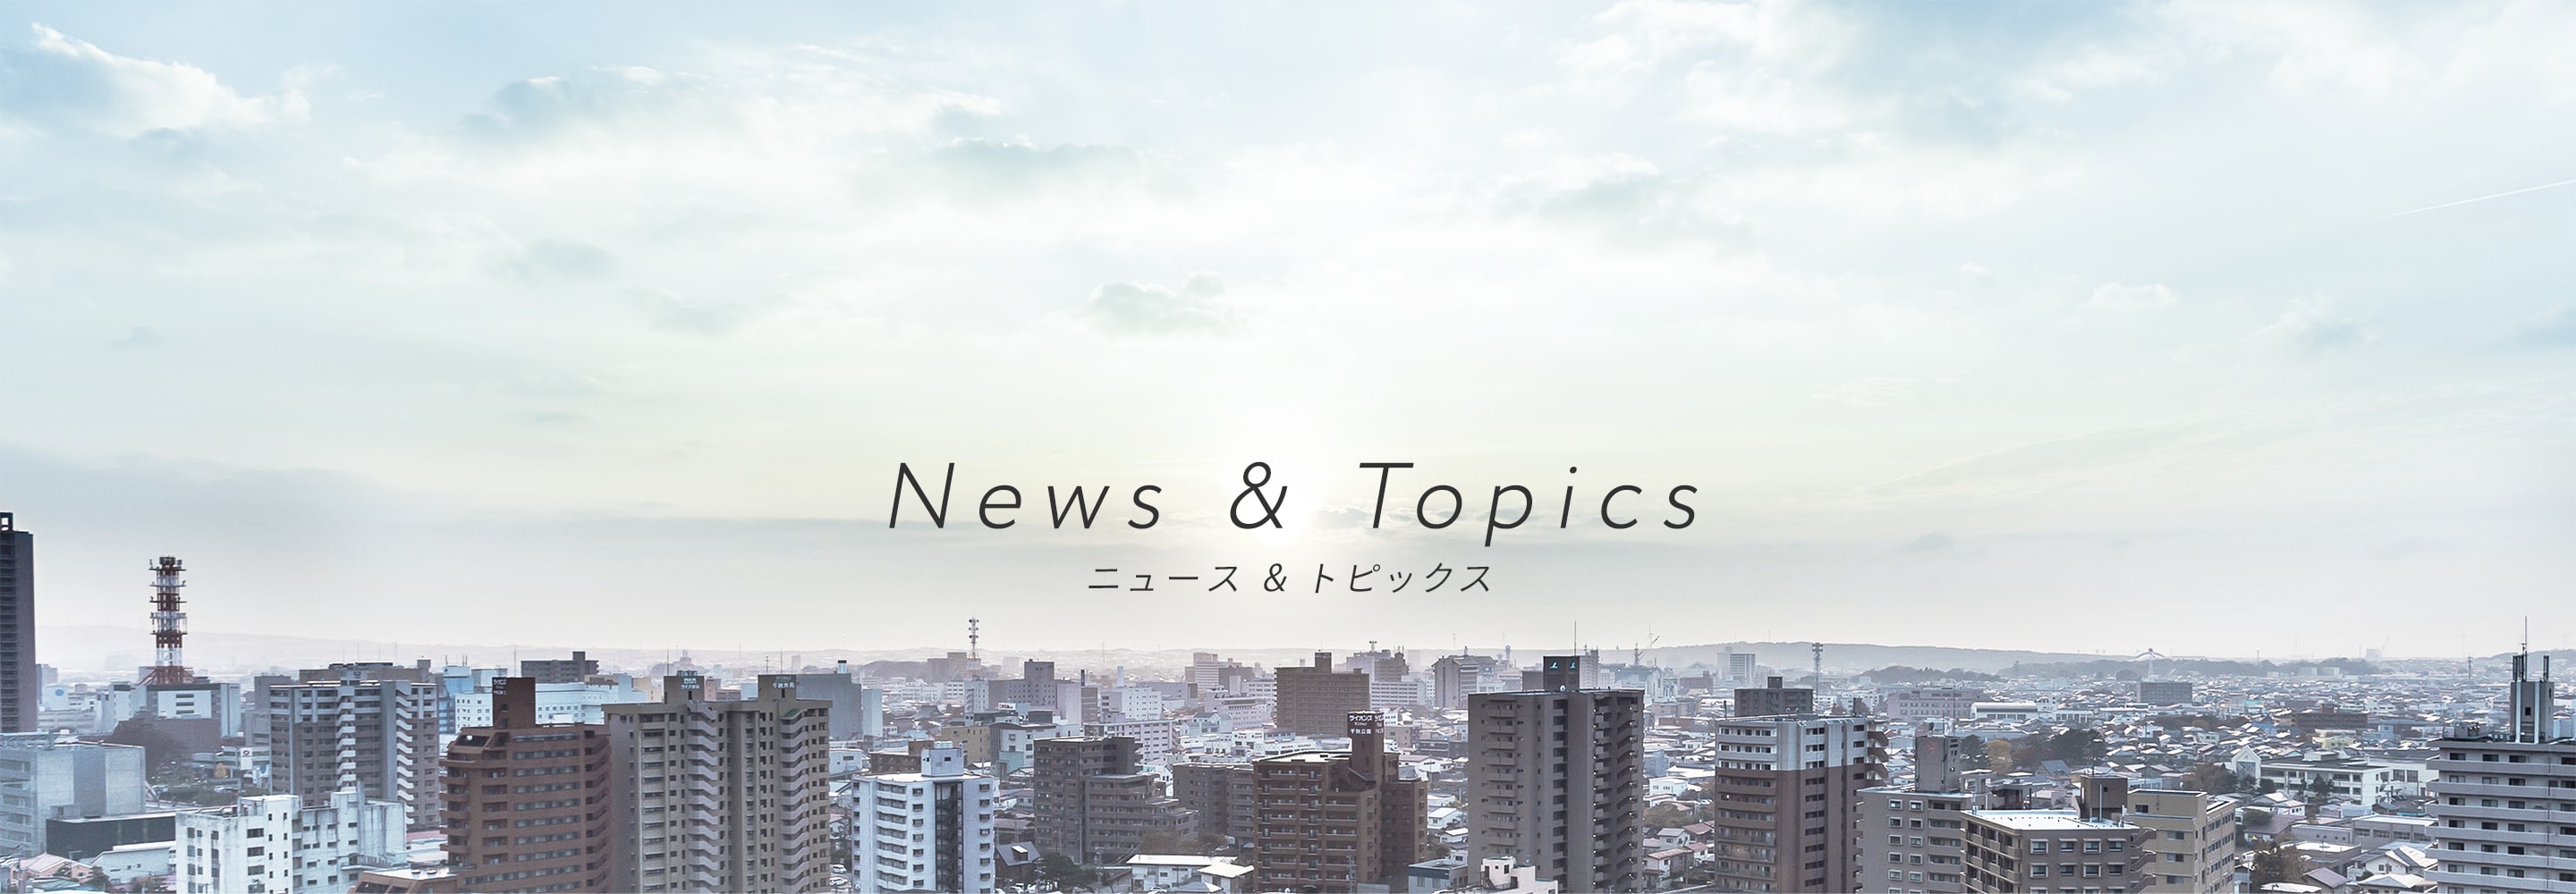 News & Topics ニュース & トピックス